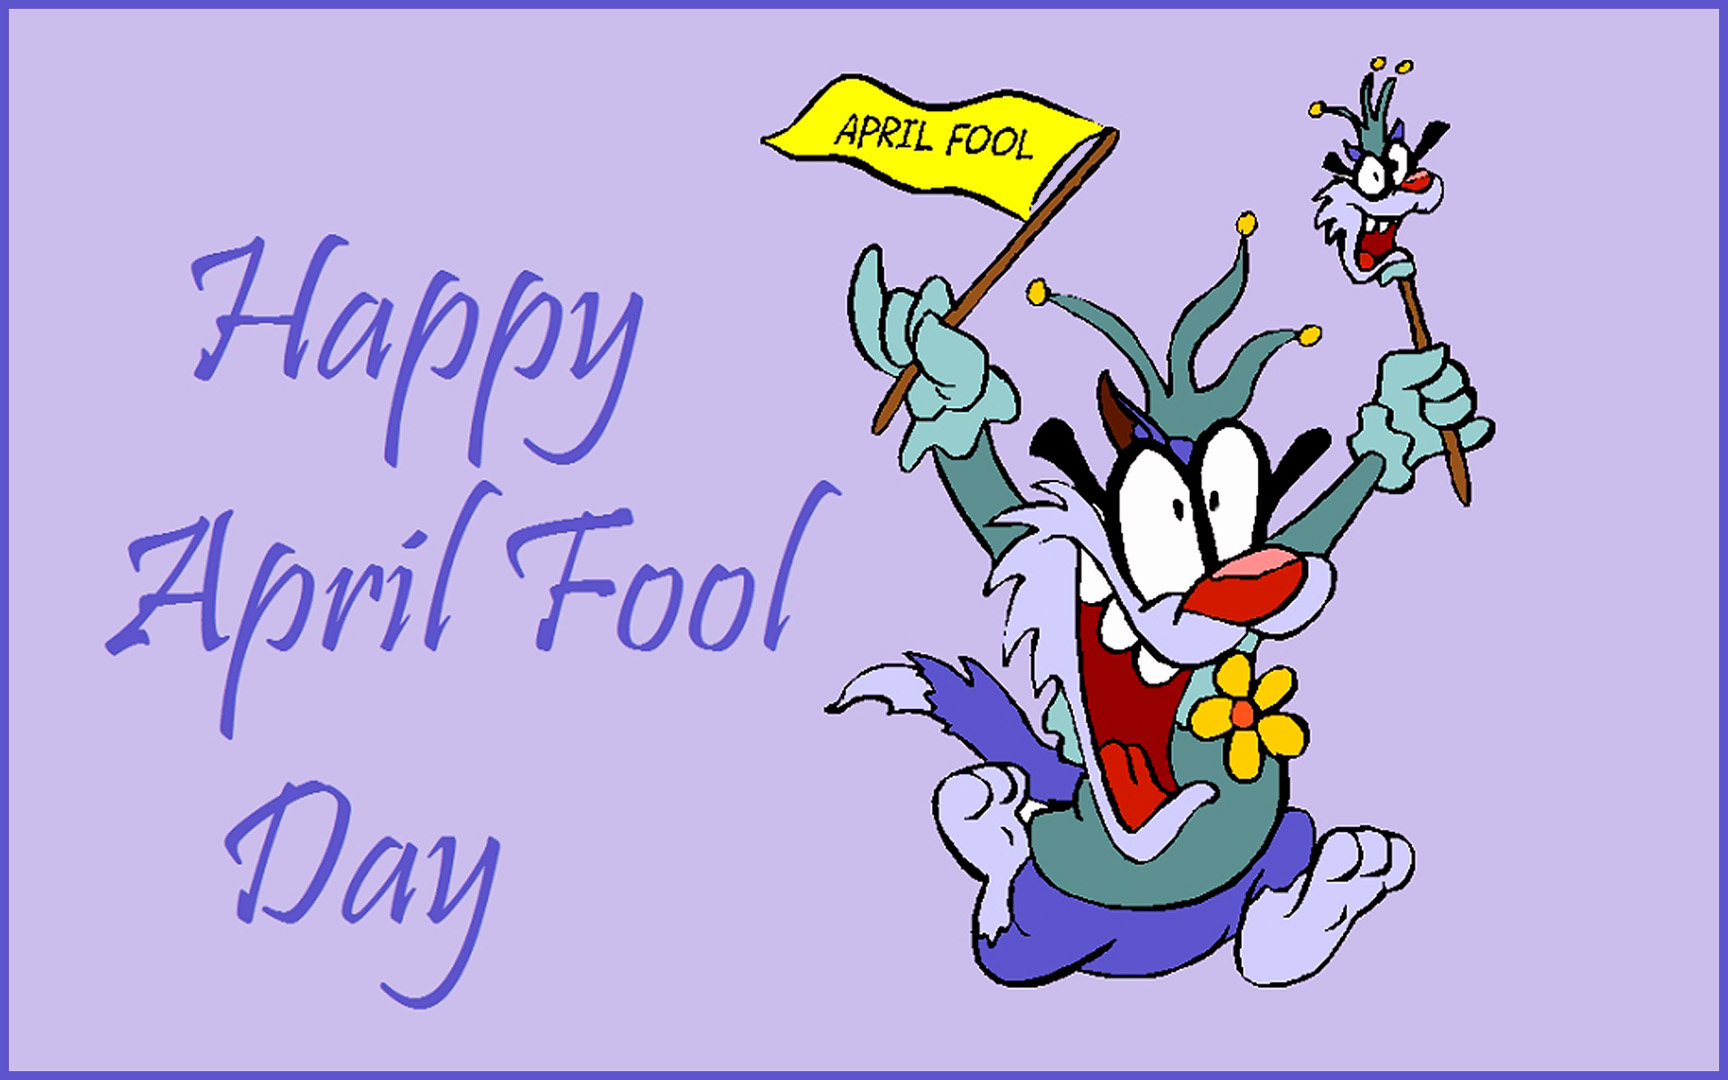 Happy fools day. 1 Апреля открытки. 1 Апреля англ. Английский праздник день дурака. Открытка с 1 апреля на английском языке.